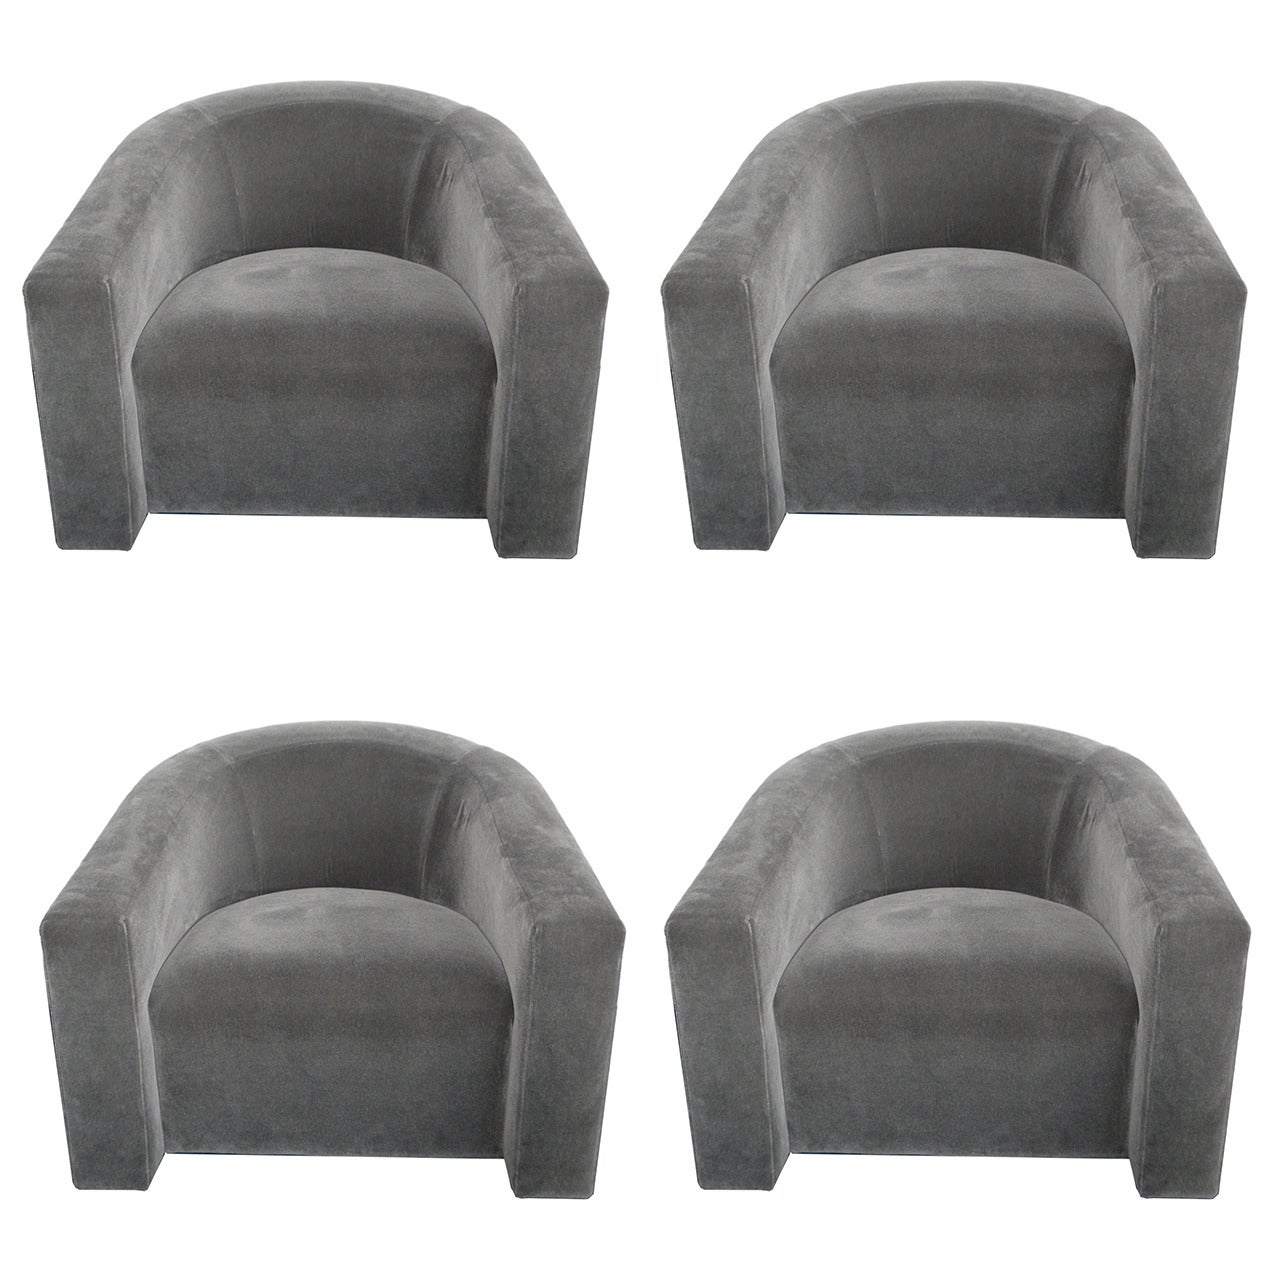 Donghia Volume Tub Chairs